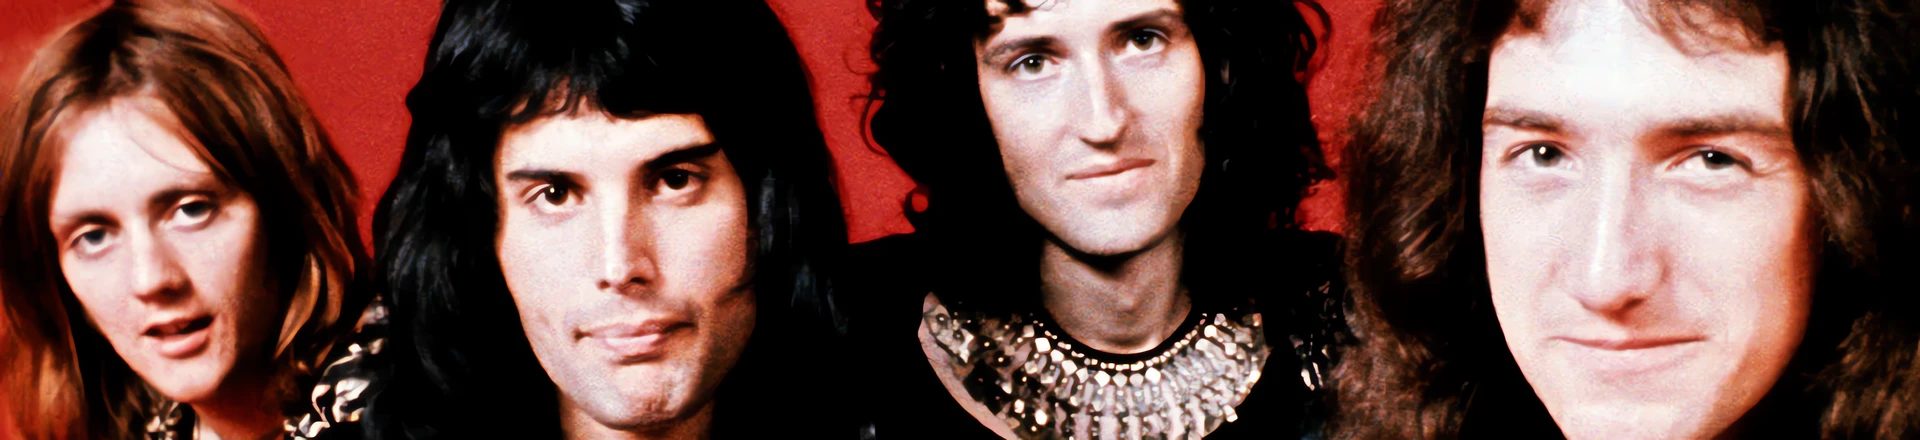 40 rocznica wydania albumu Queen "News of the World"